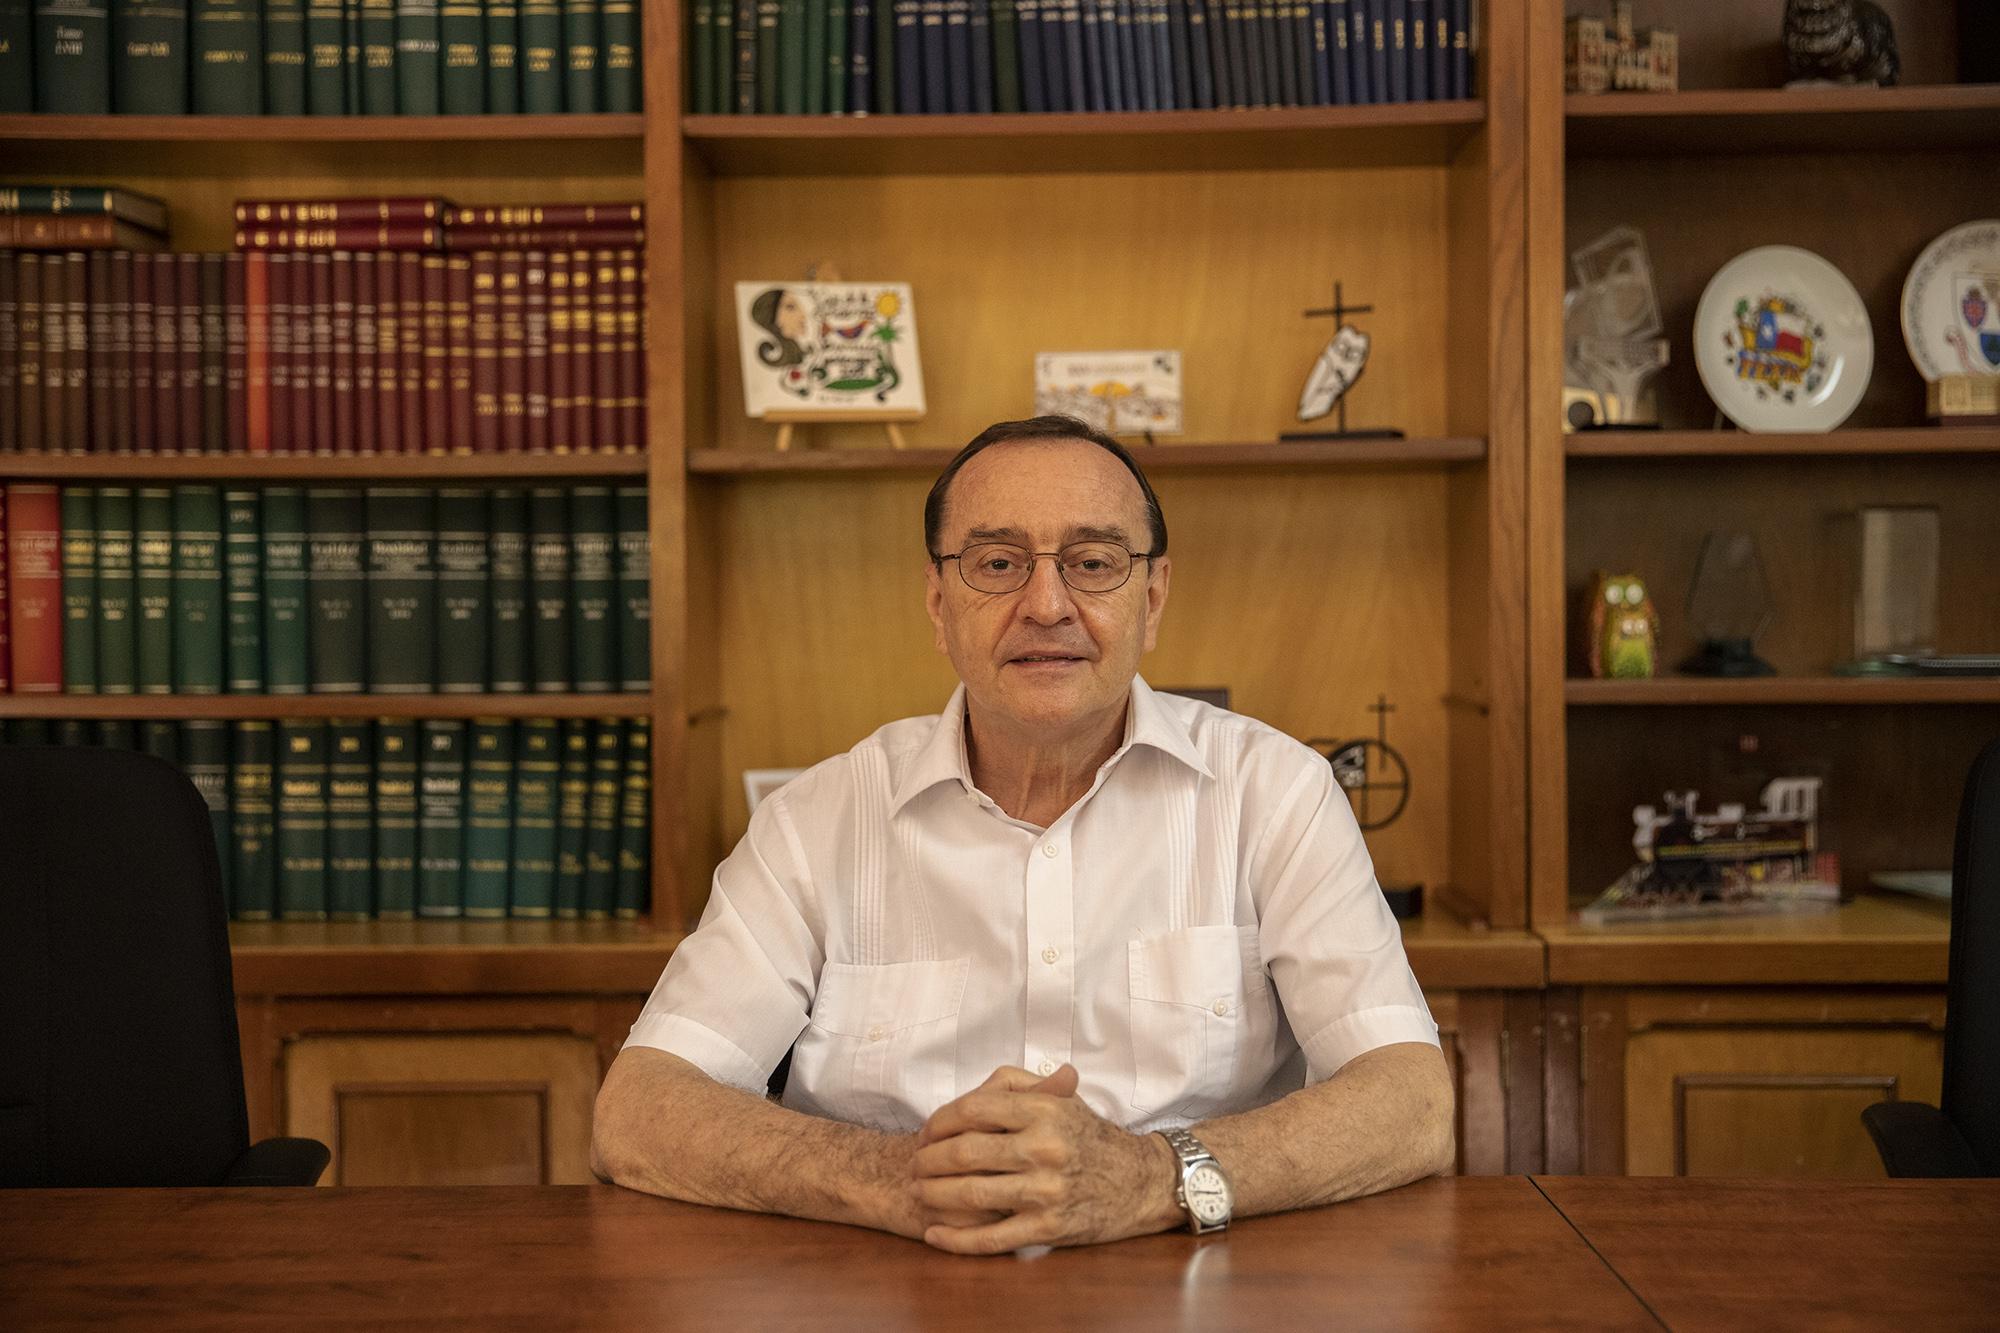 Andreu Oliva, rector of the José Simeón Cañas University of Central America (UCA El Salvador), in the meeting room in the university